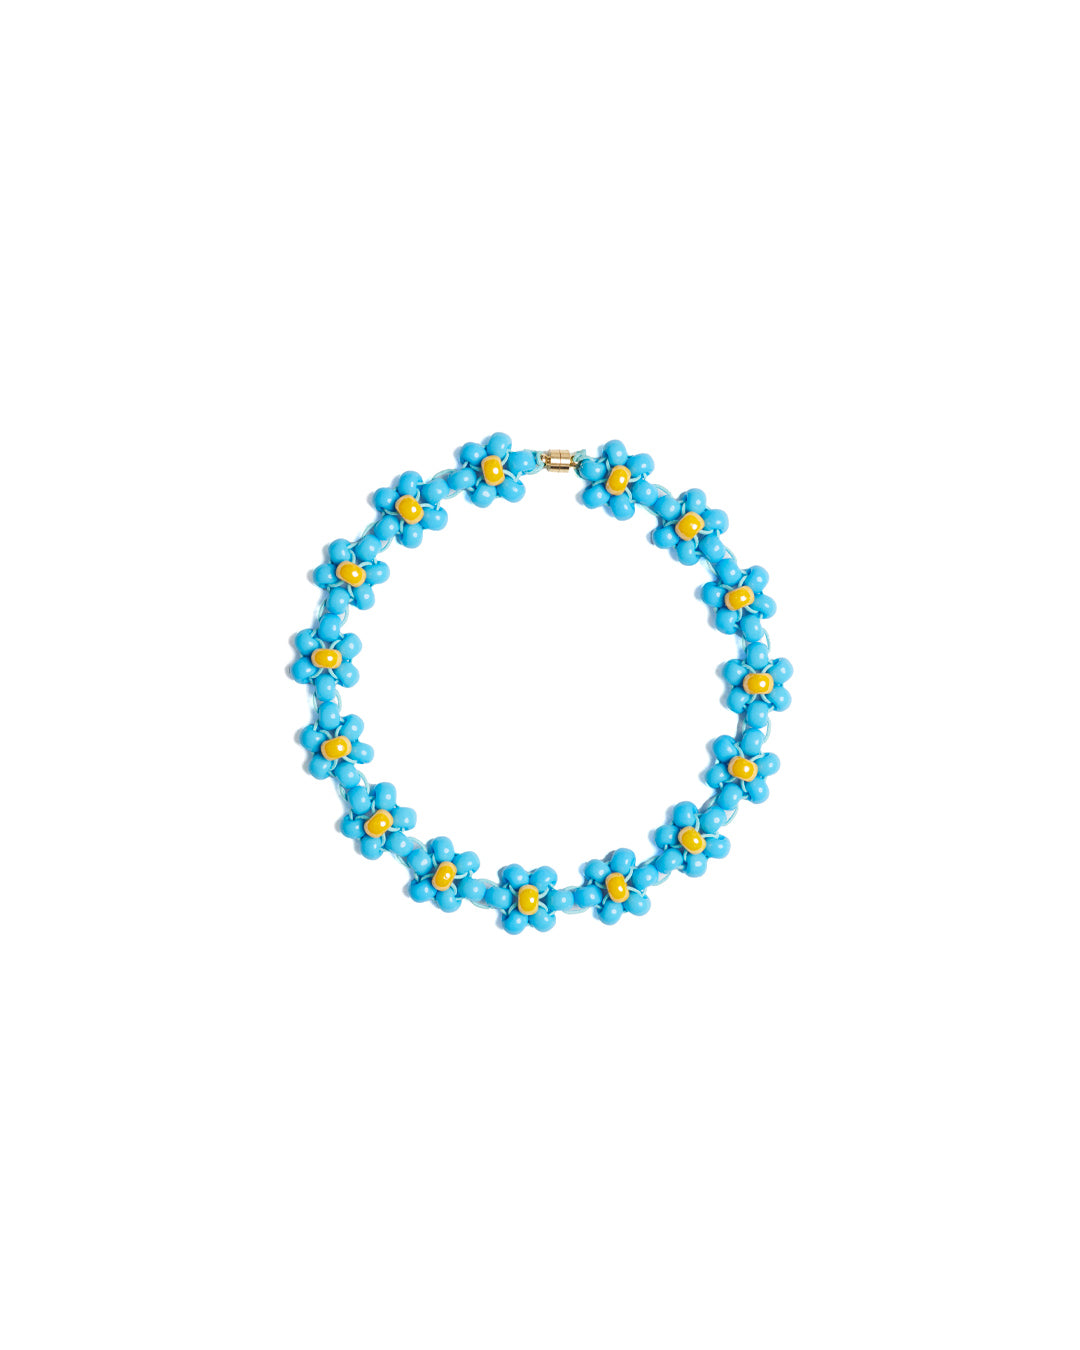 Handamde beads necklace - Fleur de Peau